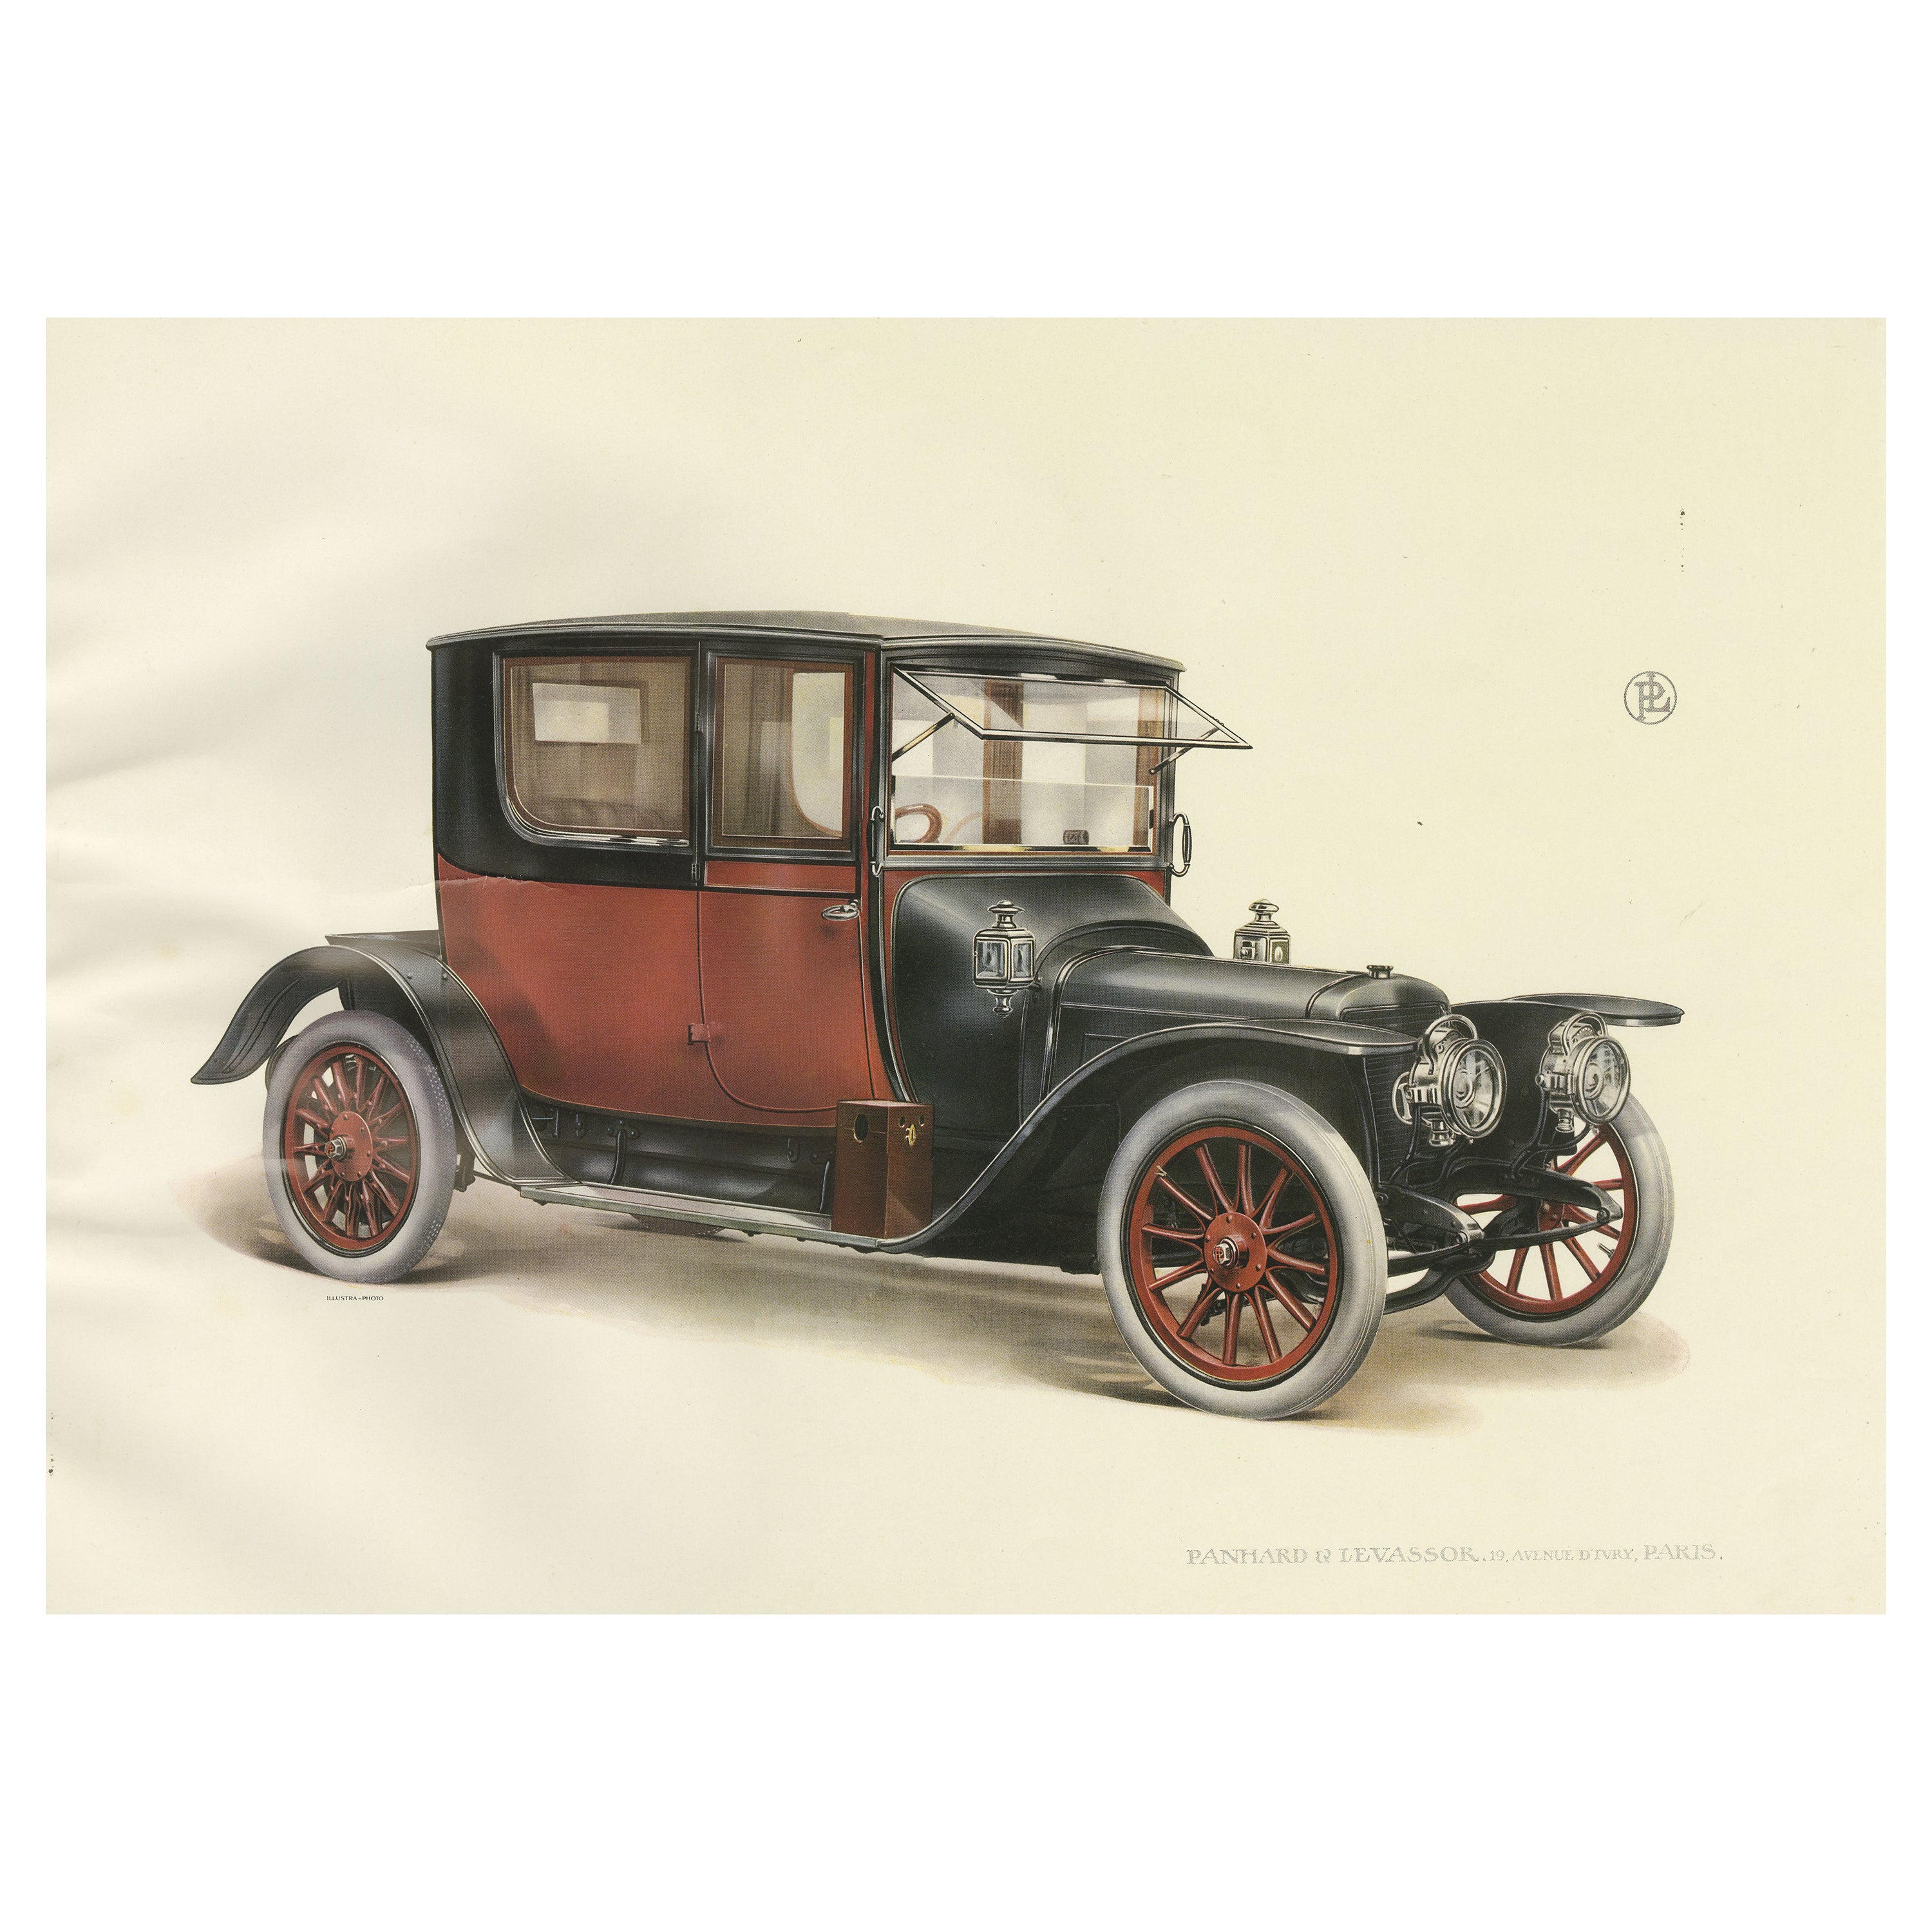 Antique Print of the Panhard Et Levassor Coupe 4pl Conduite Car, 1914 For Sale